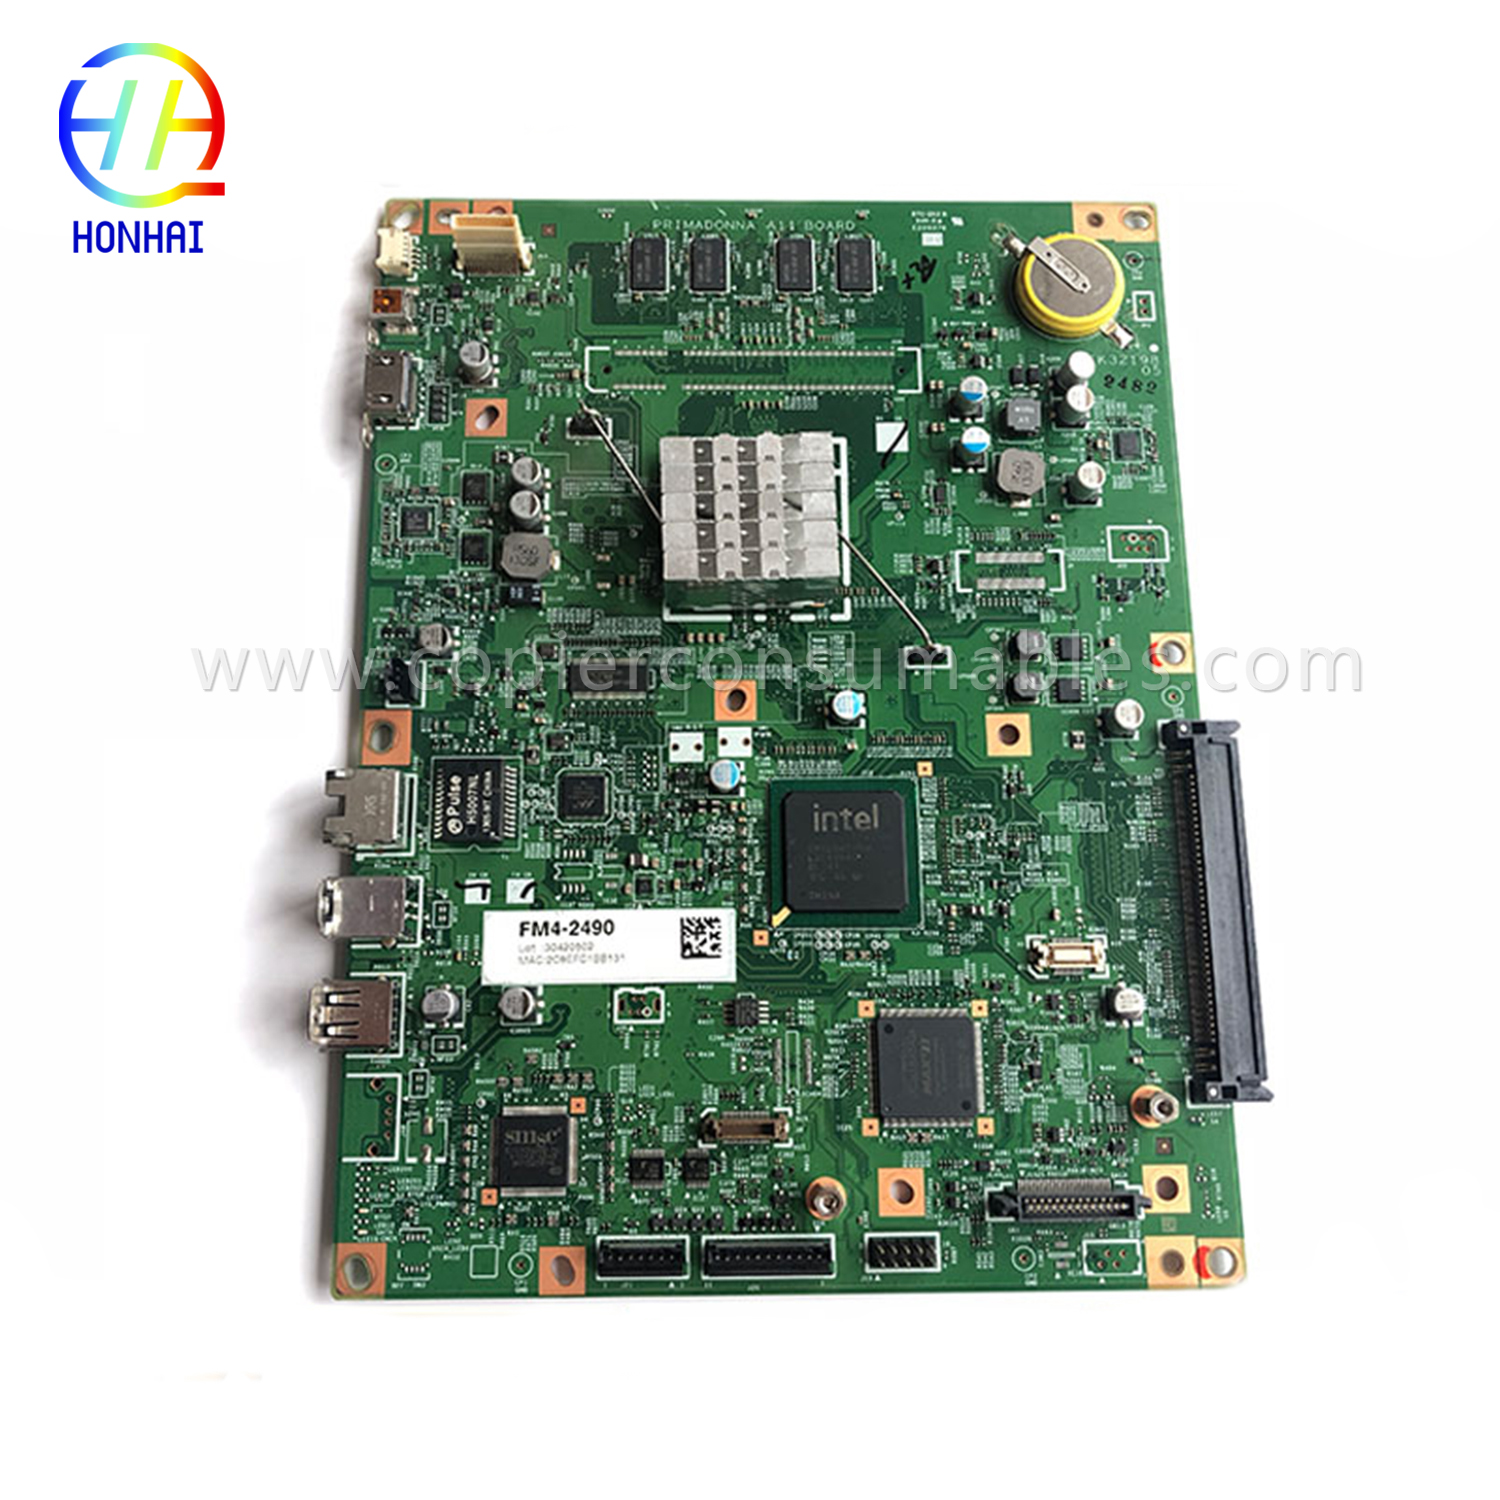 Main Controller PCB Board for Canon IR Adv 6255 6265 6275 OEM (FM4-2490-000)